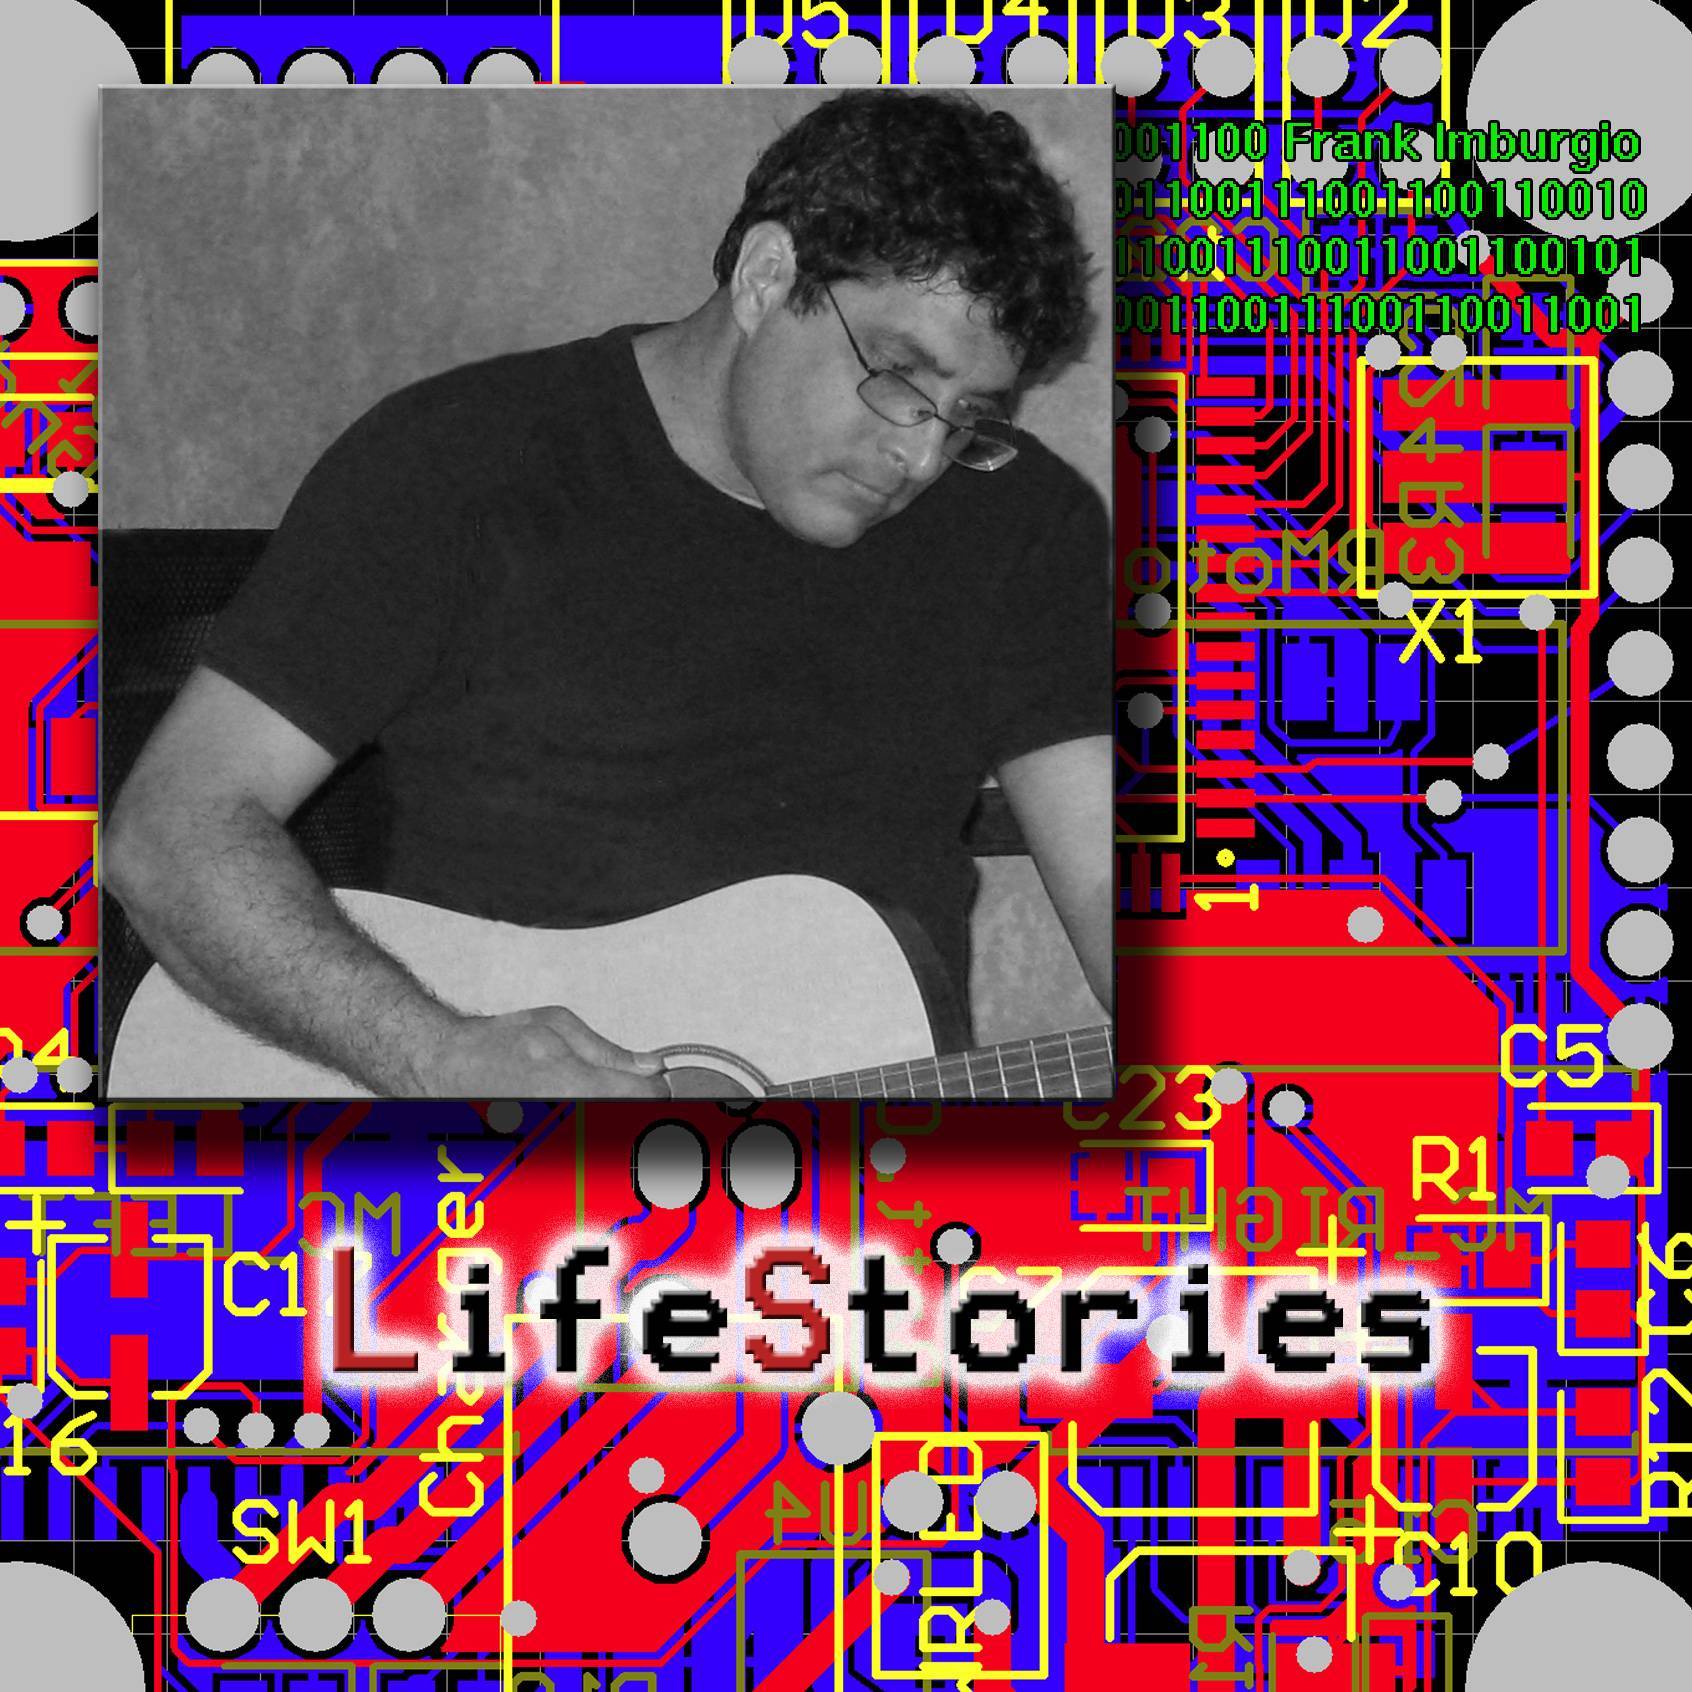 lifestories-cover